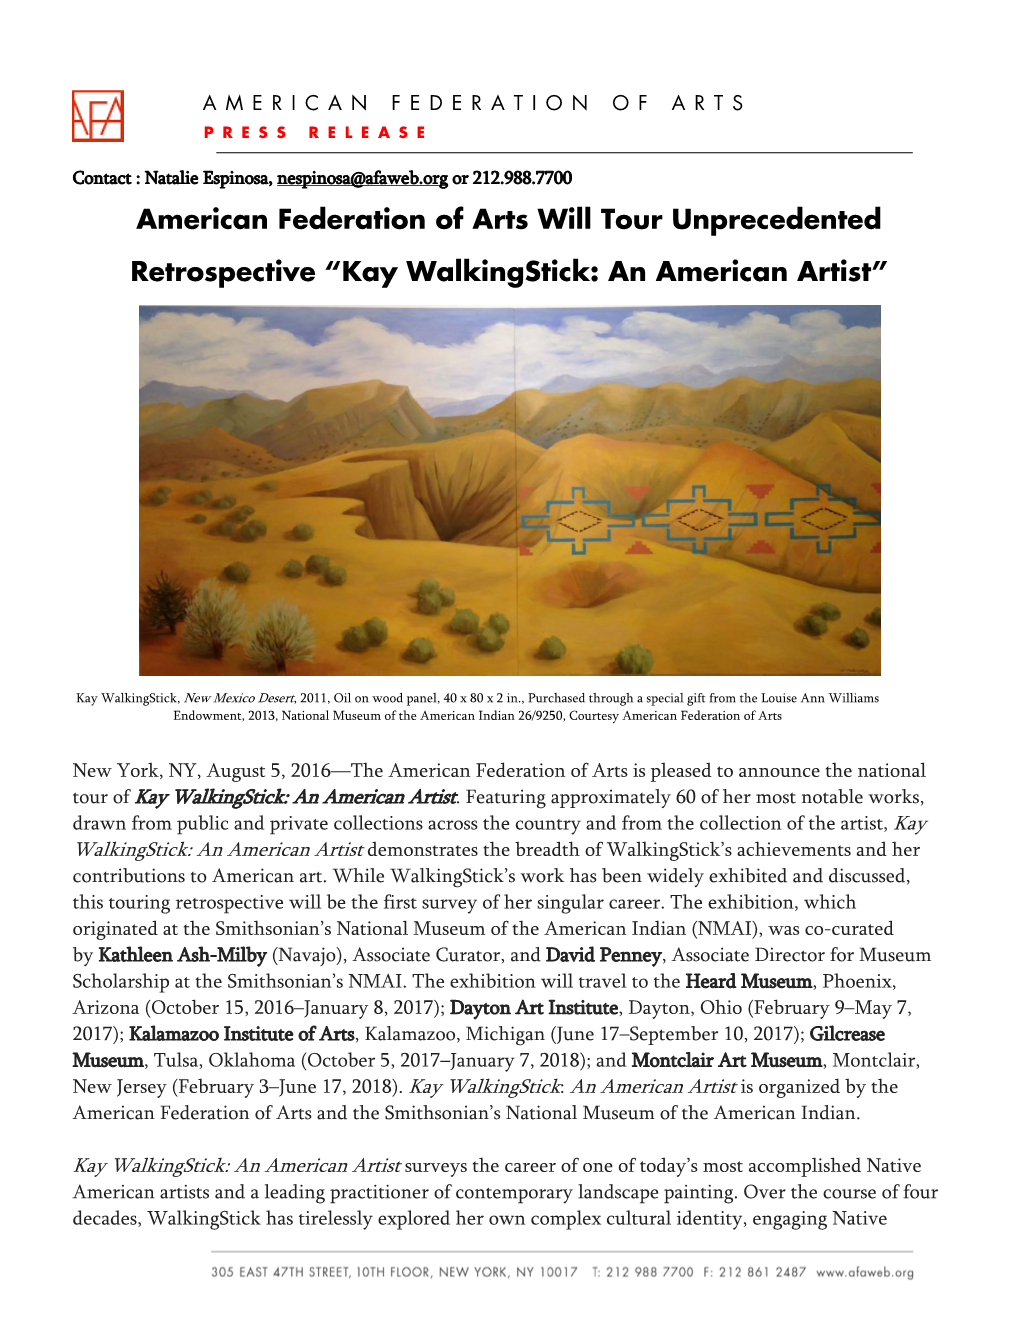 American Federation of Arts Will Tour Unprecedented Retrospective “Kay Walkingstick: an American Artist”